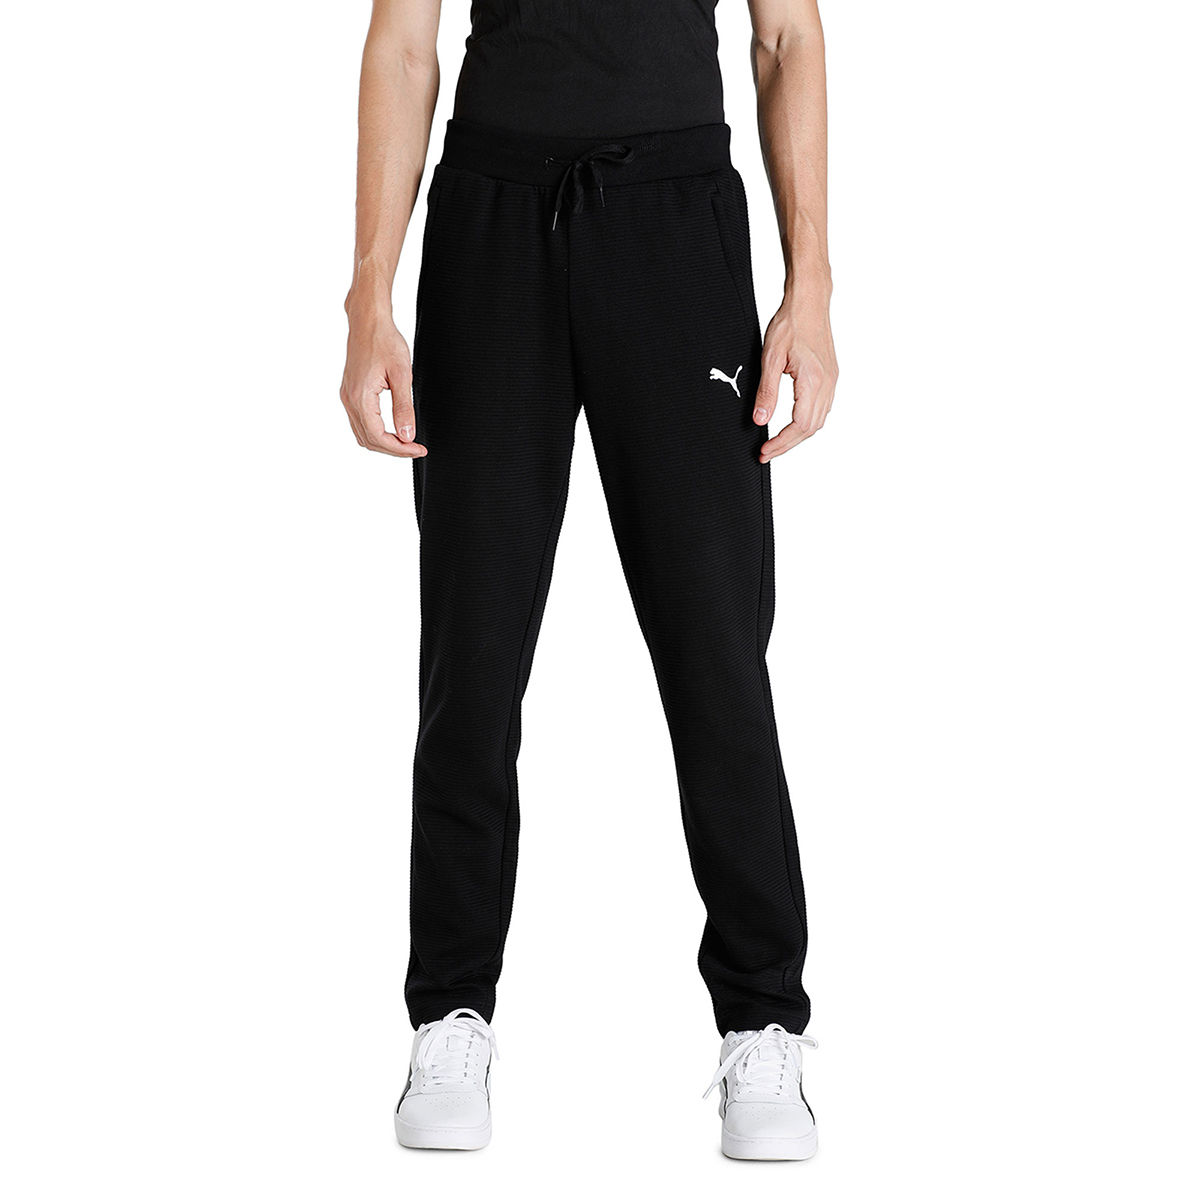 Puma OTTOMAN Mens Black Casual Sweat Pant (XL)